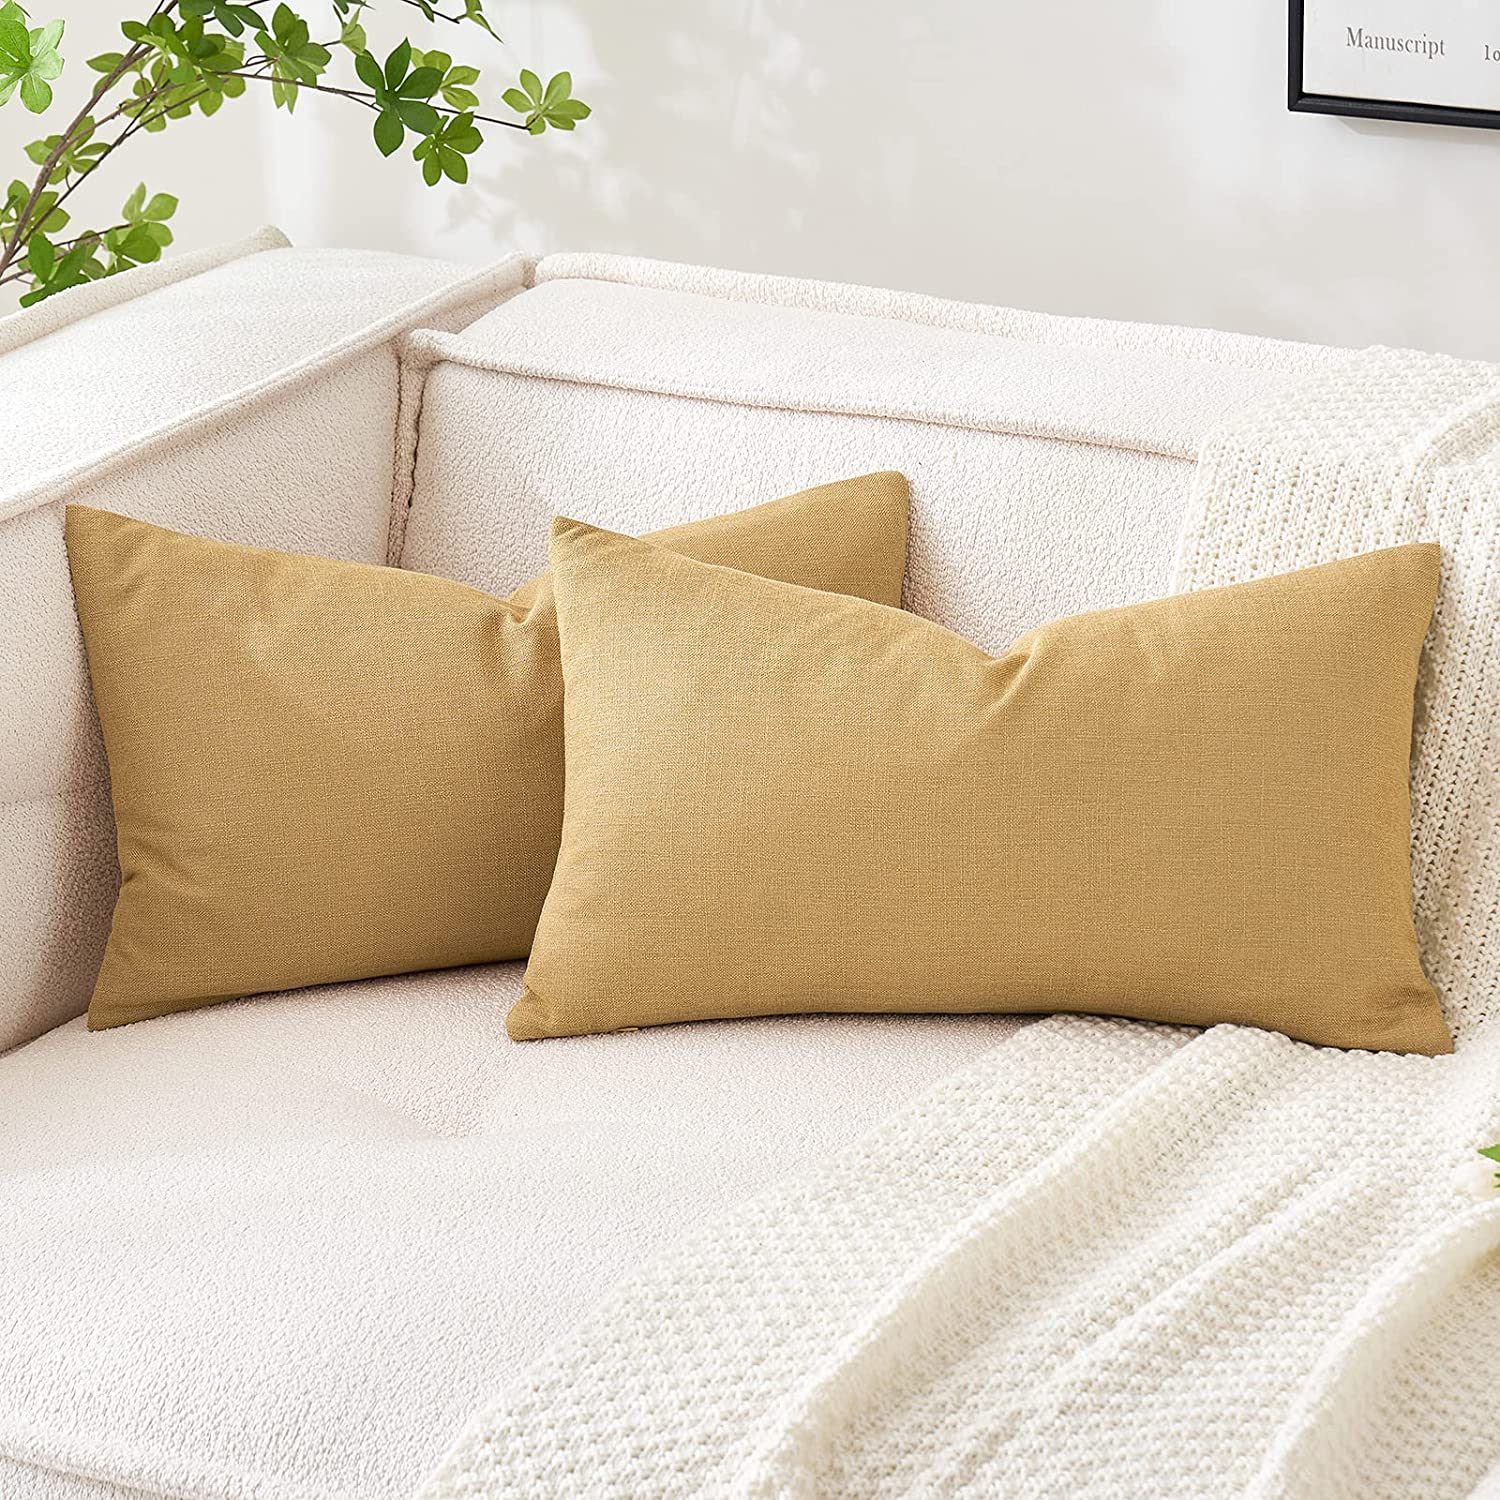  MIULEE Pack of 2 Decorative Burlap Linen Throw Pillow